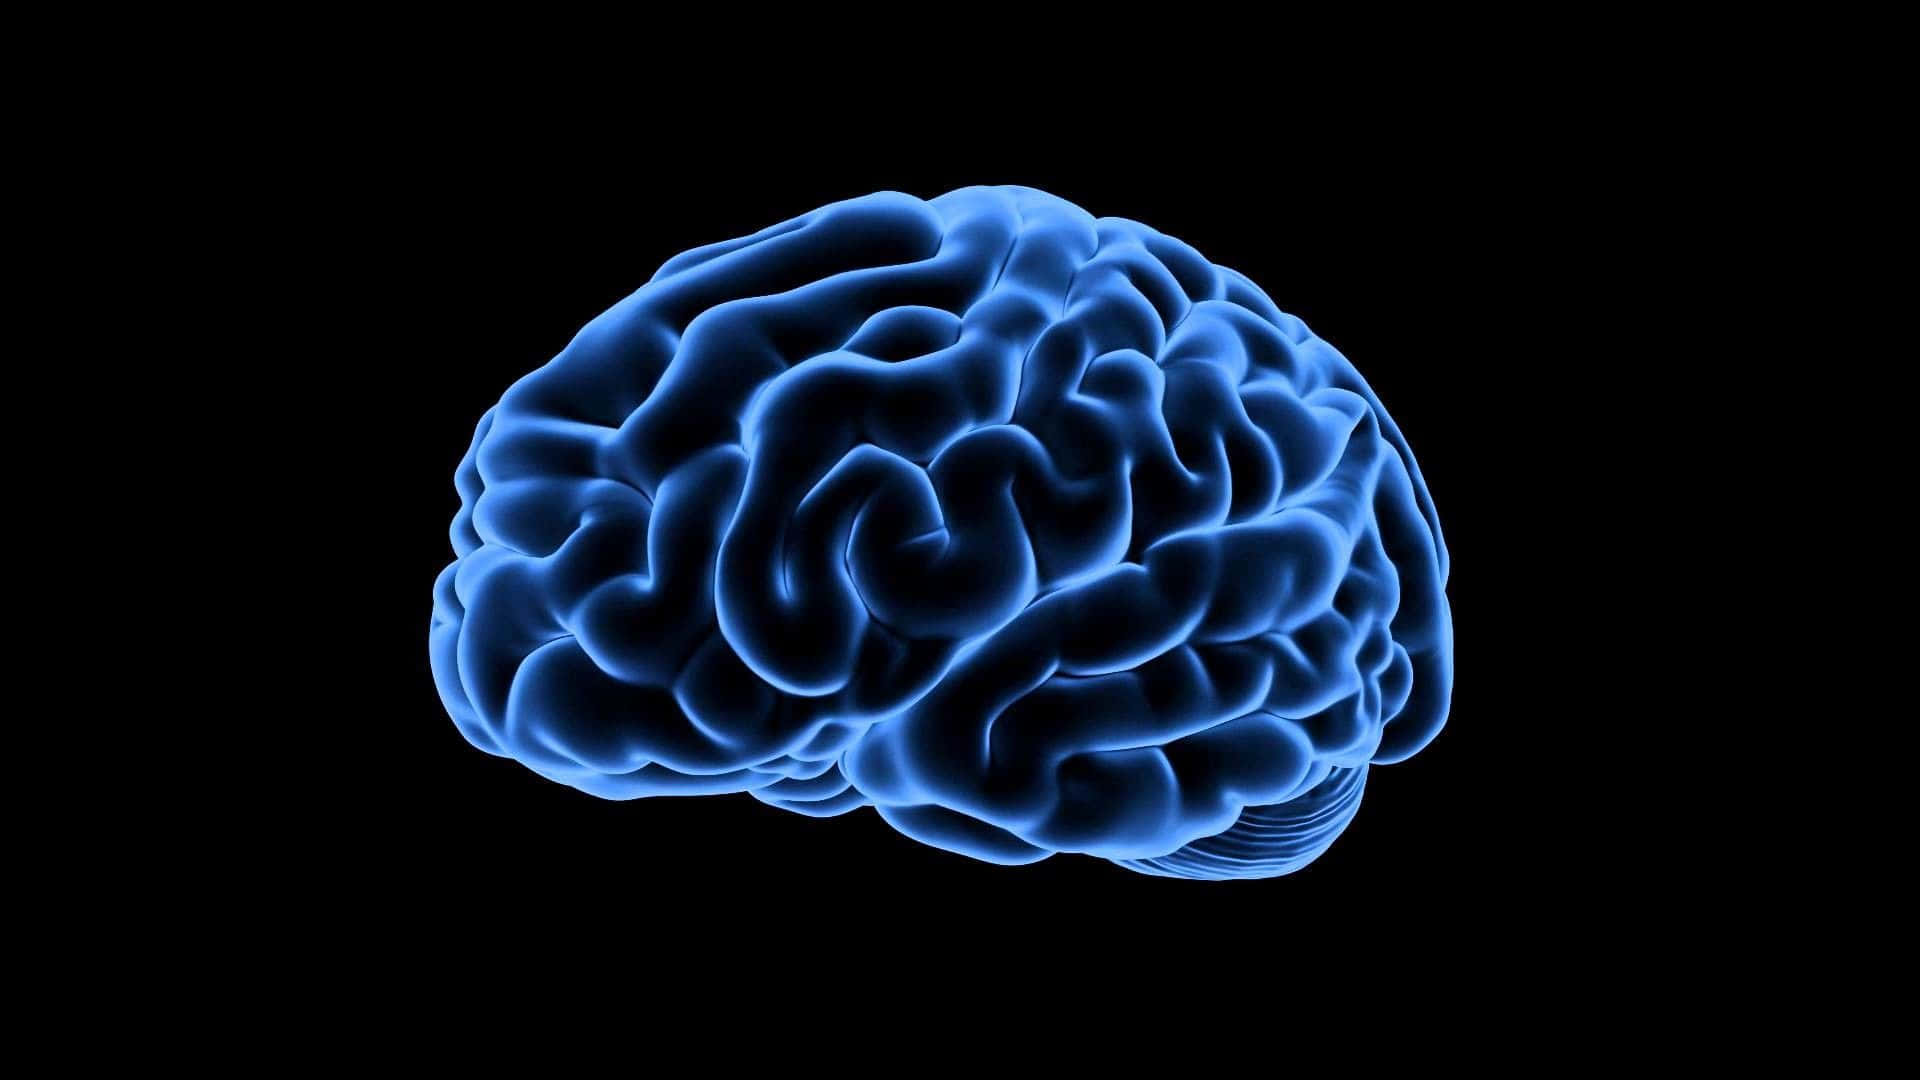 A Blue Human Brain On A Black Background